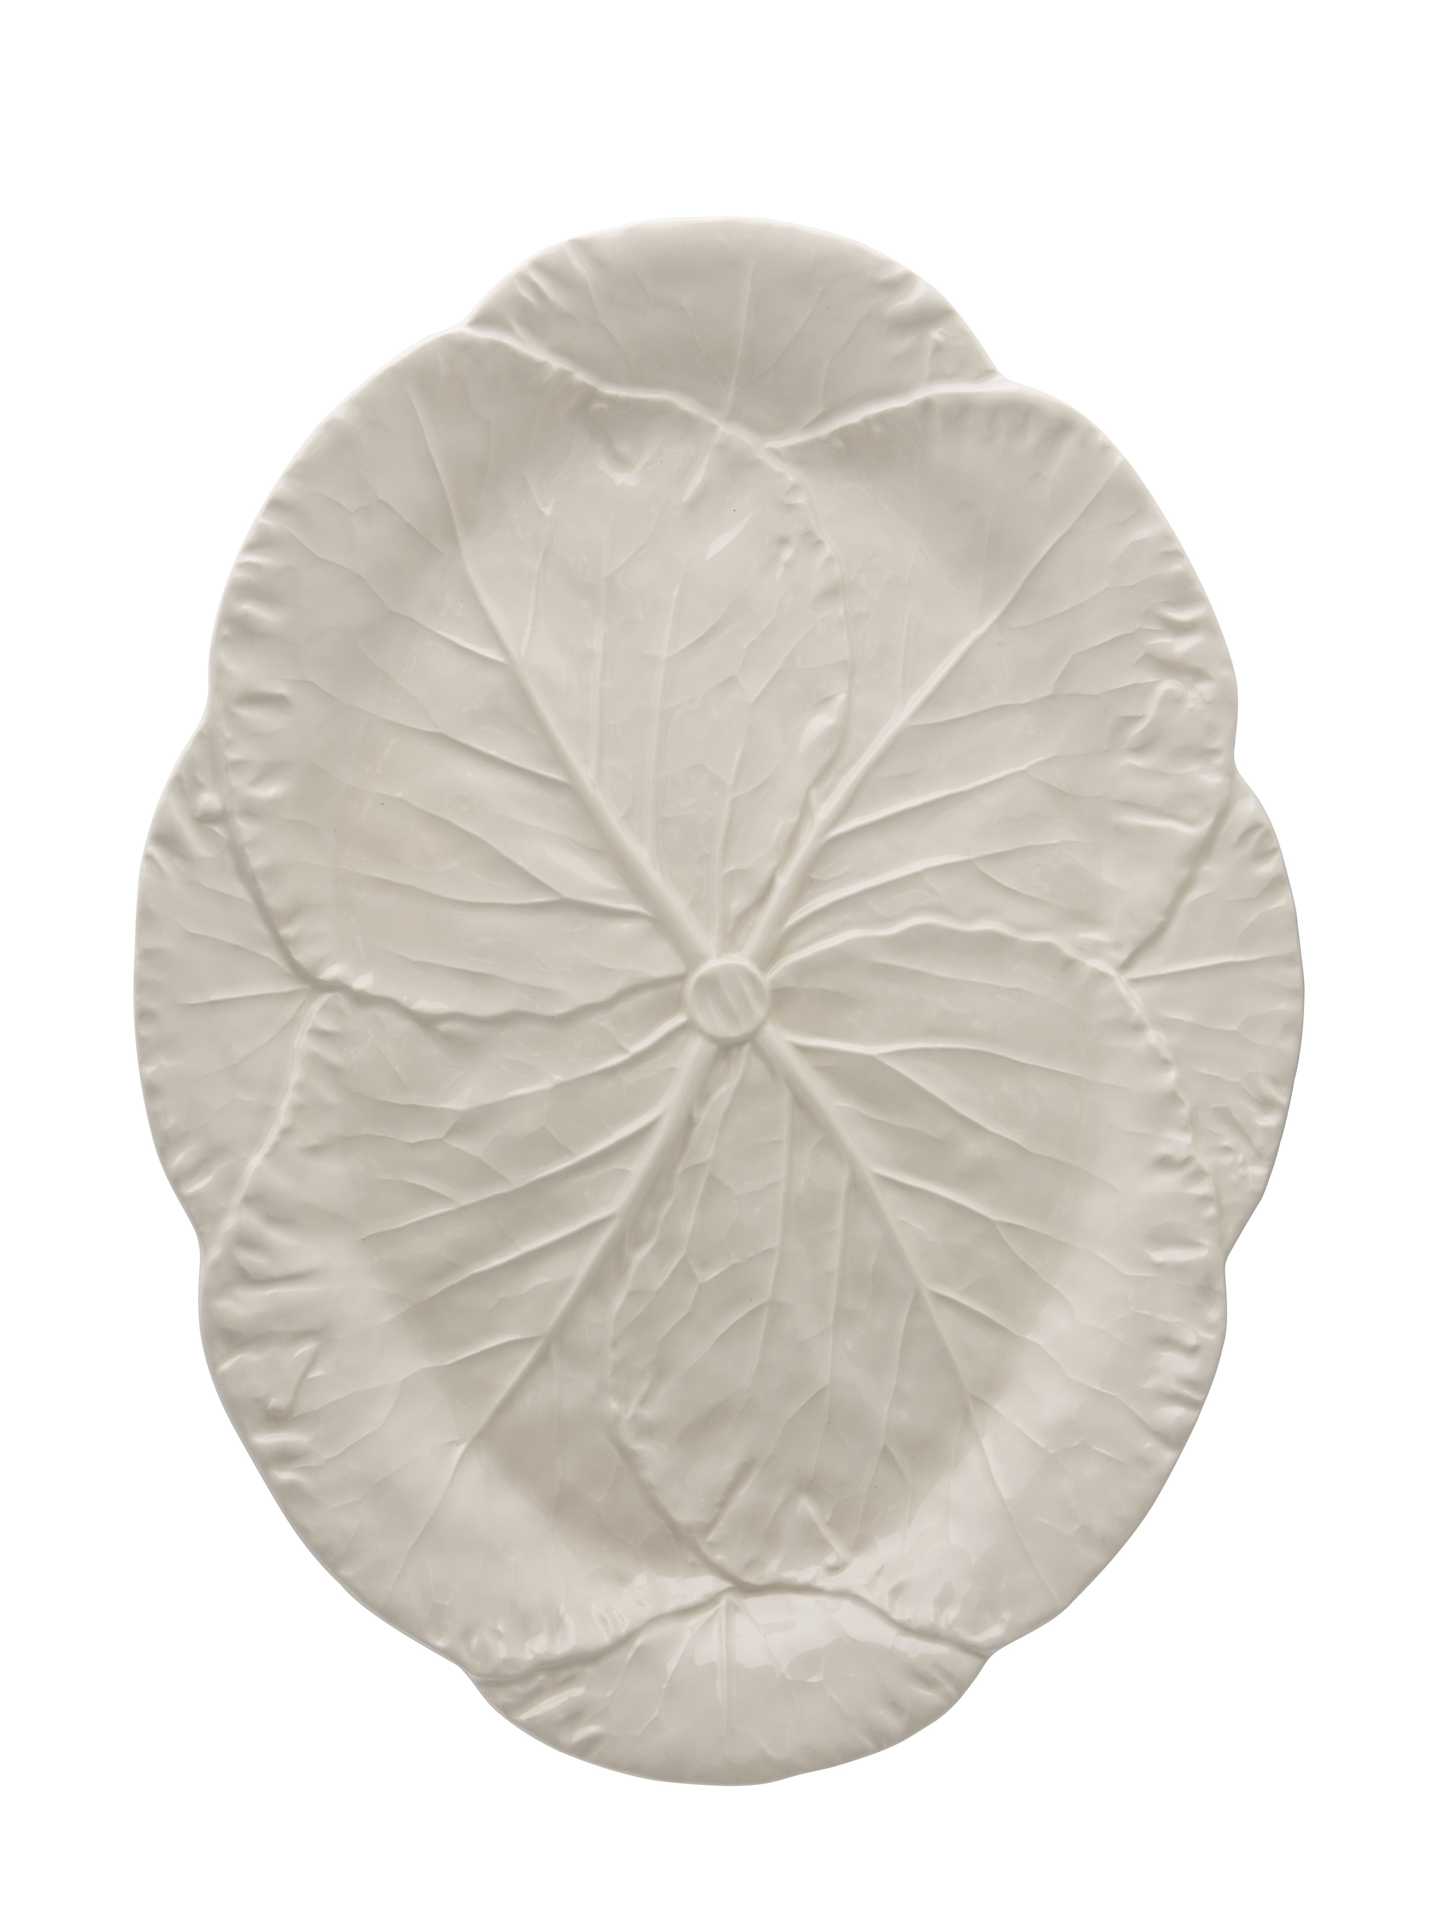 Large Oval Cabbage Platter, Ivory